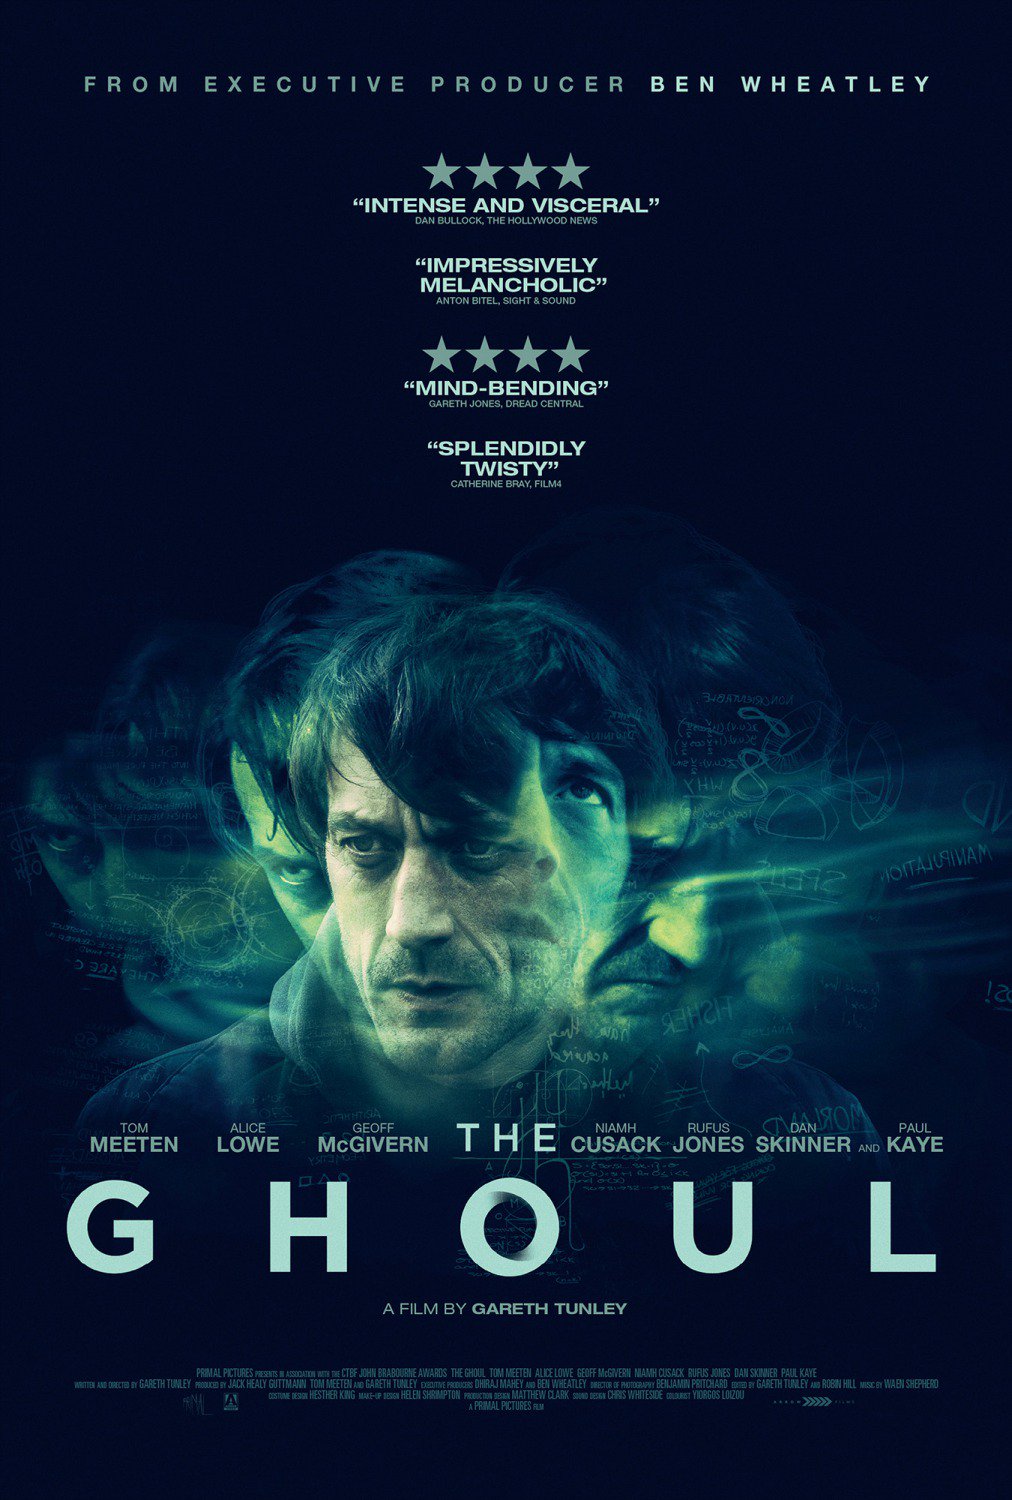 Nonton film The Ghoul layarkaca21 indoxx1 ganool online streaming terbaru